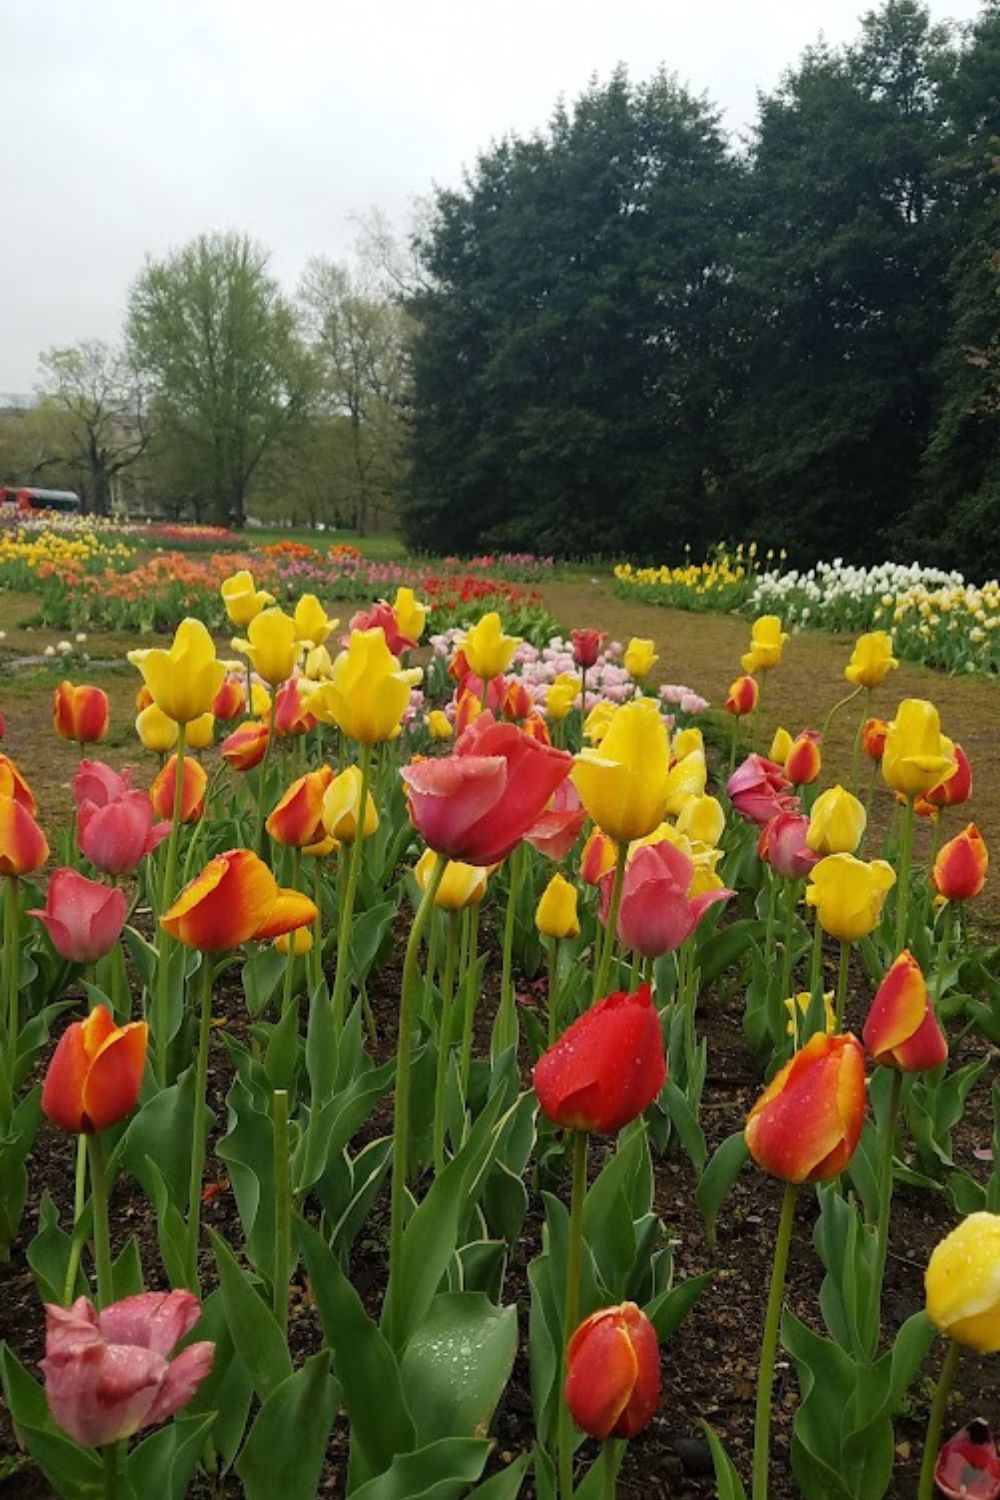 Field of tulips in Washington DC. 